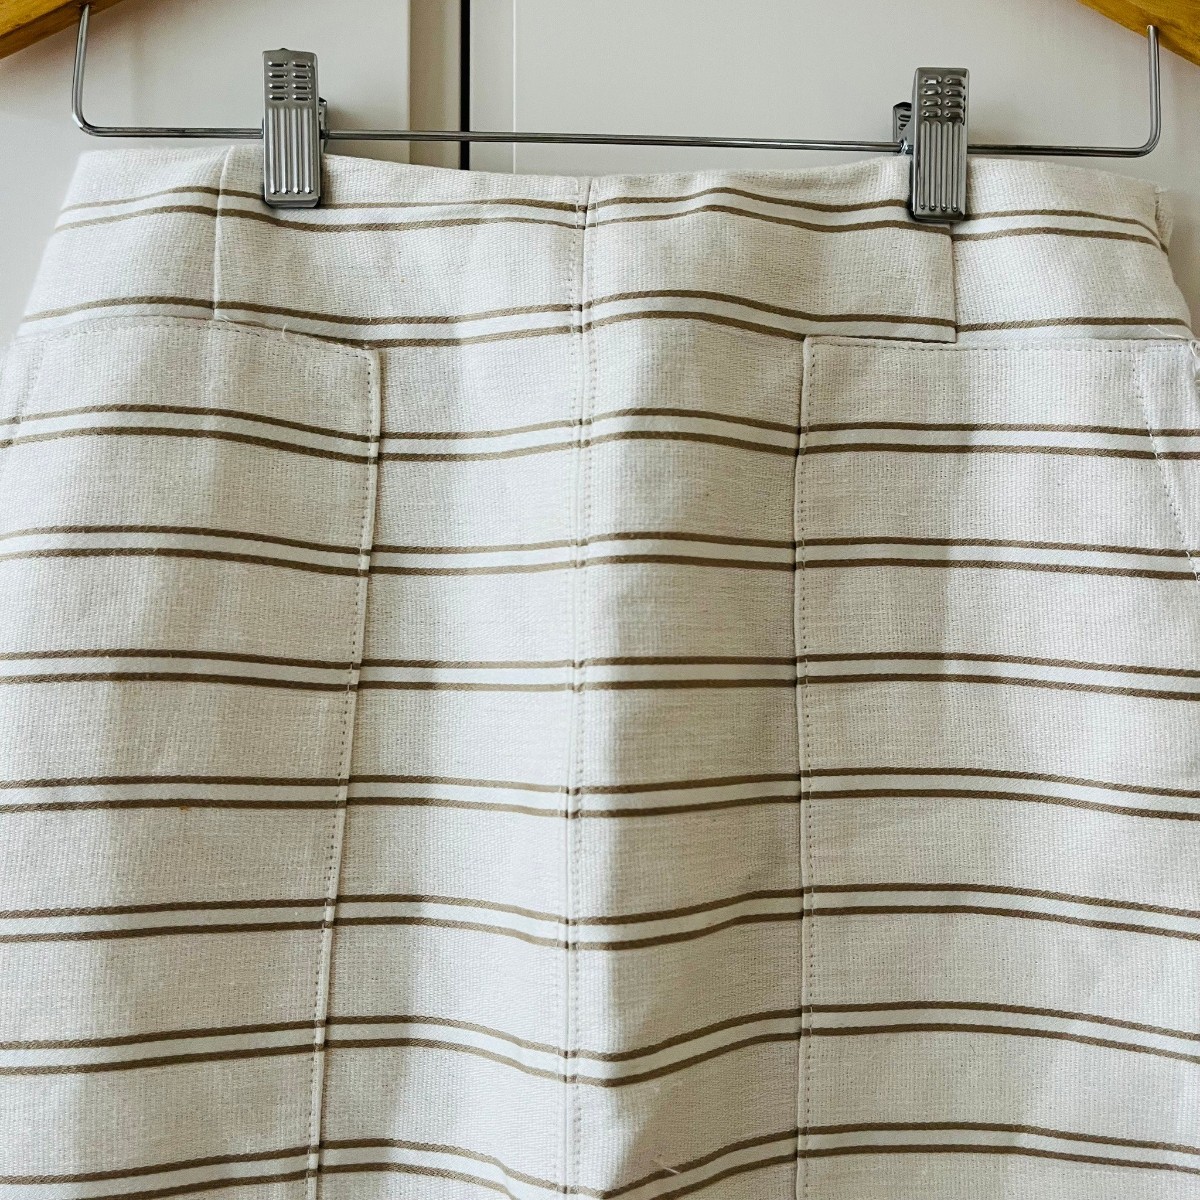 H5826cL made in Japan IENA Iena size 38 (M rank ) tight skirt mi leak height stripe pattern white × beige cotton flax . race up lady's 